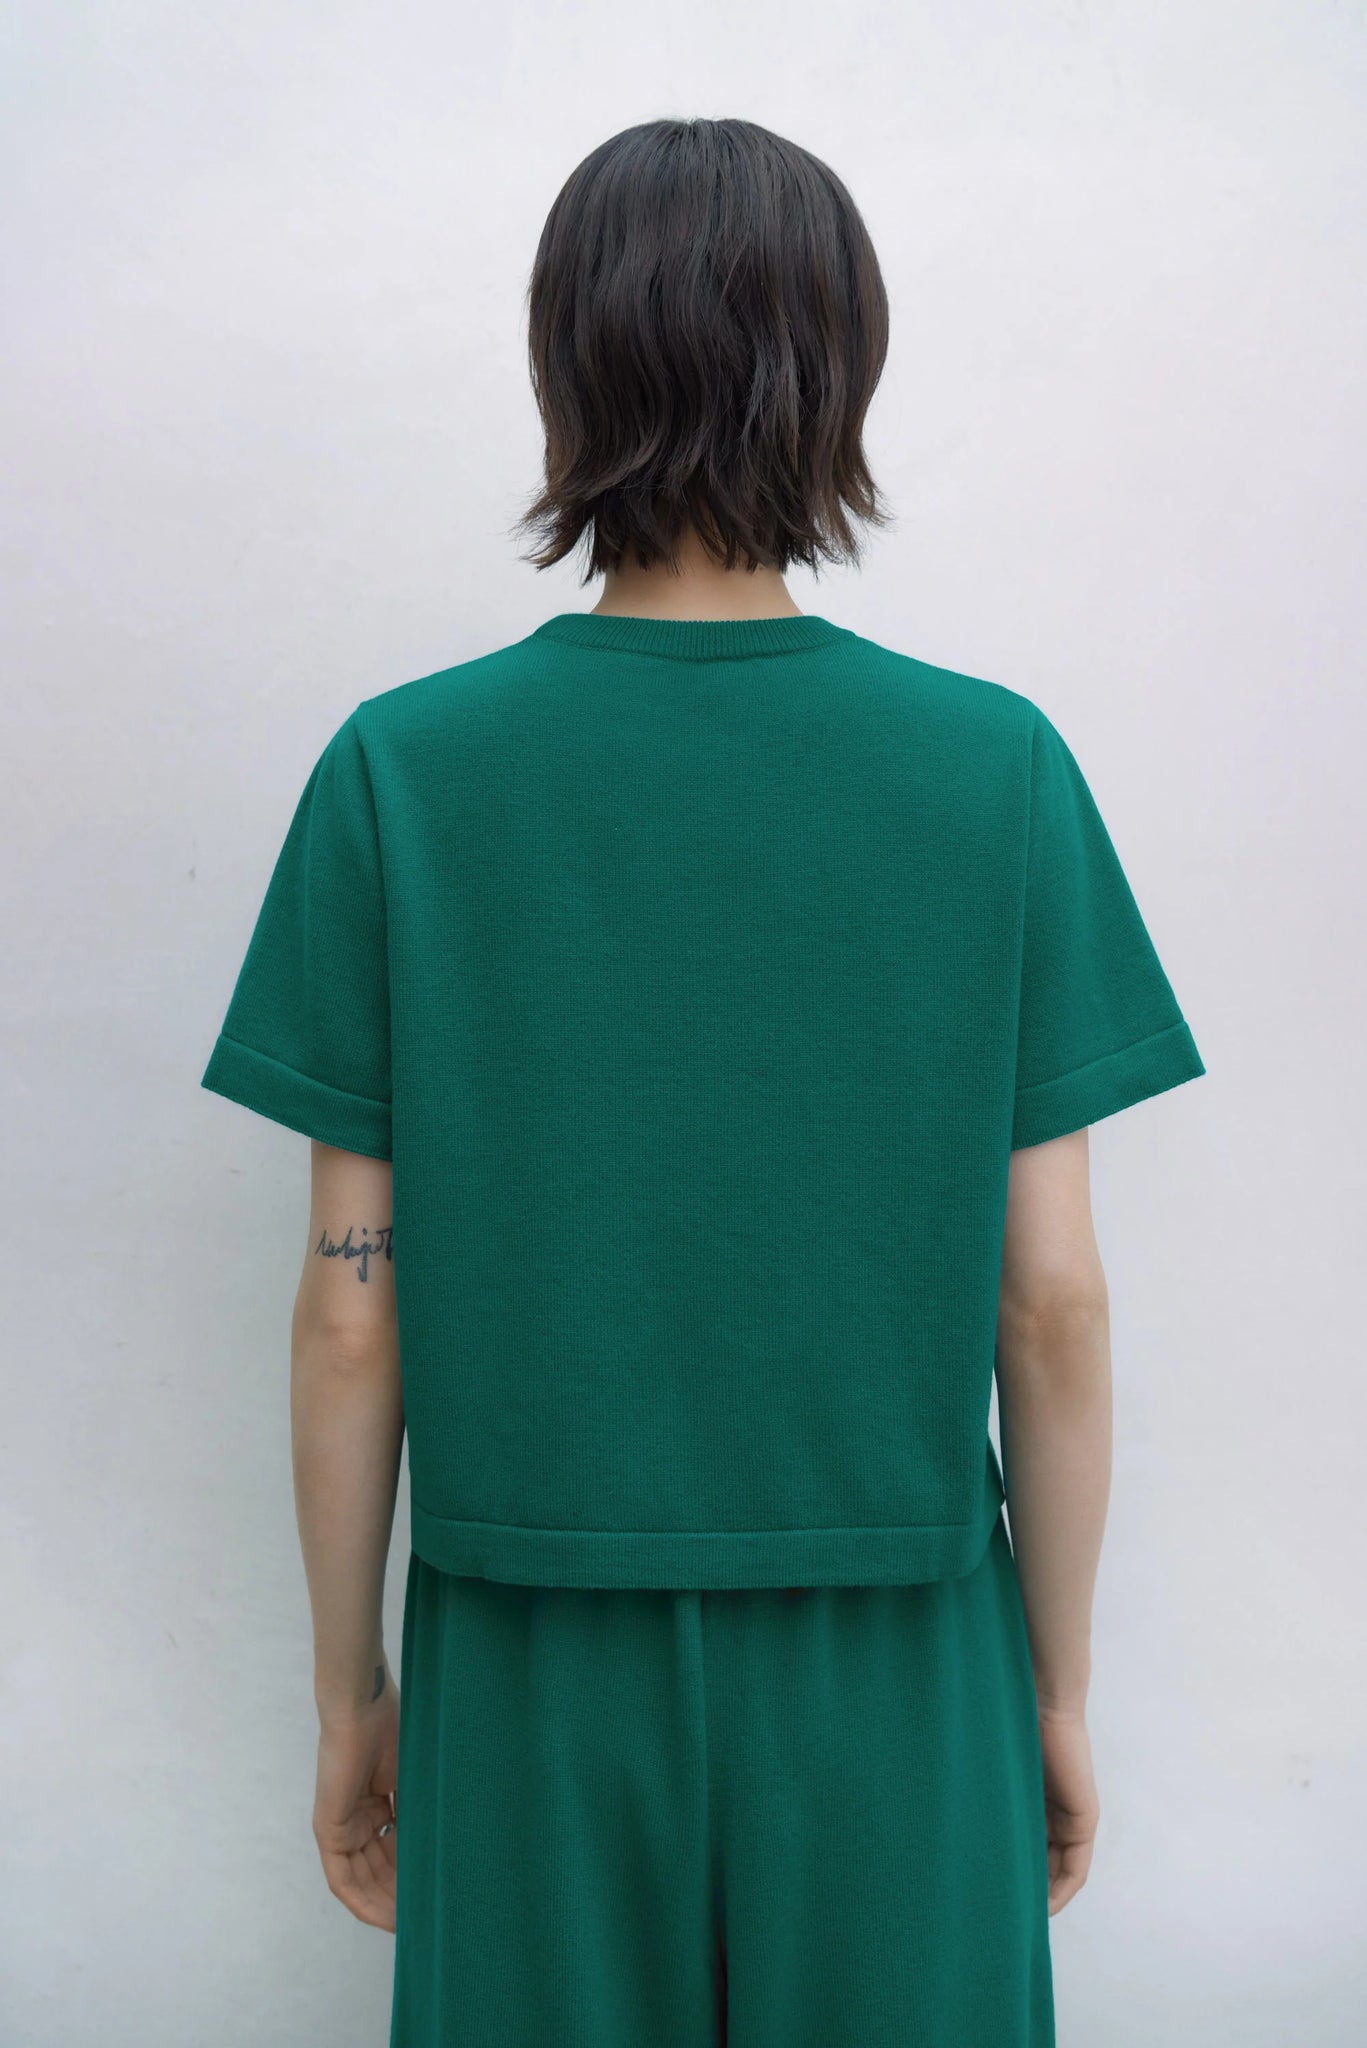 Cordera merino wool t-shirt teal green back